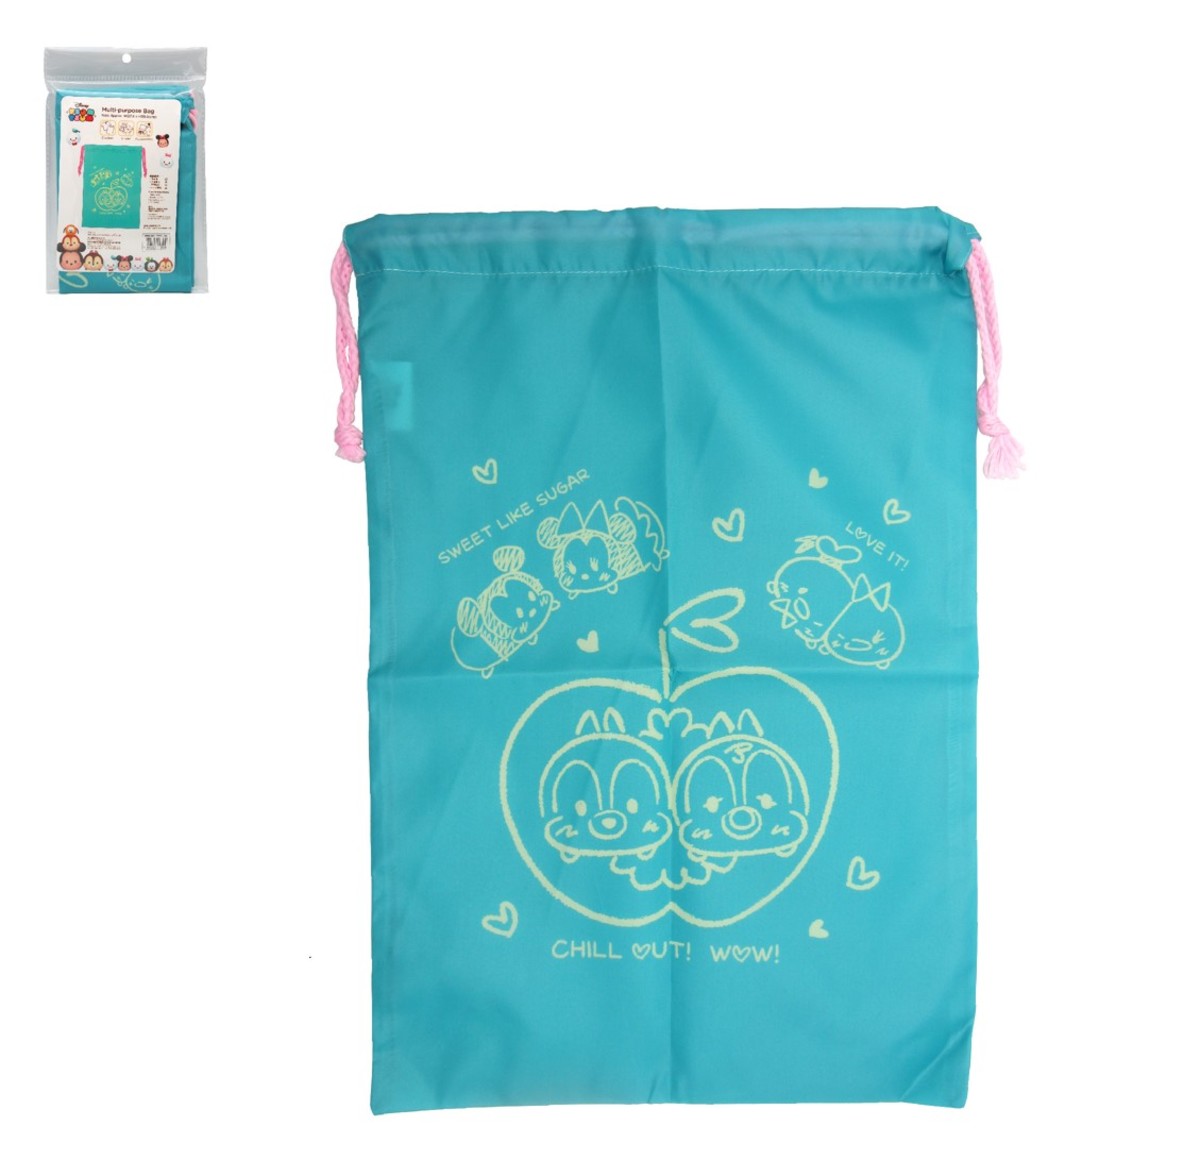 Disney | TsumTsum multi-purpose bag (Licensed by Disney)